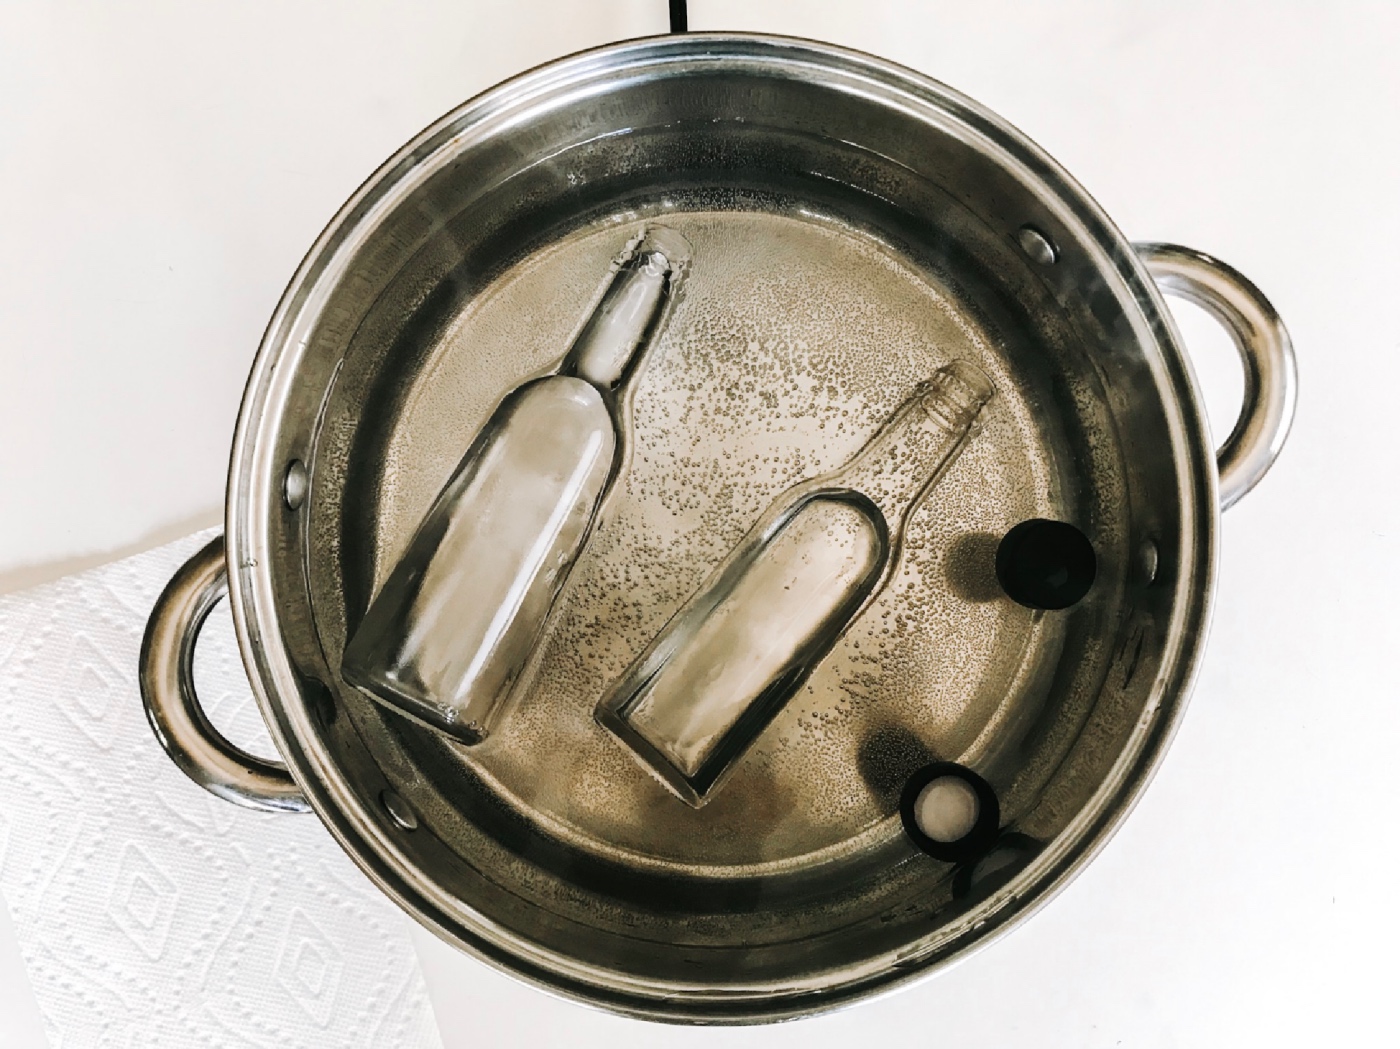 how to sterilize hot sauce jars pop shop america